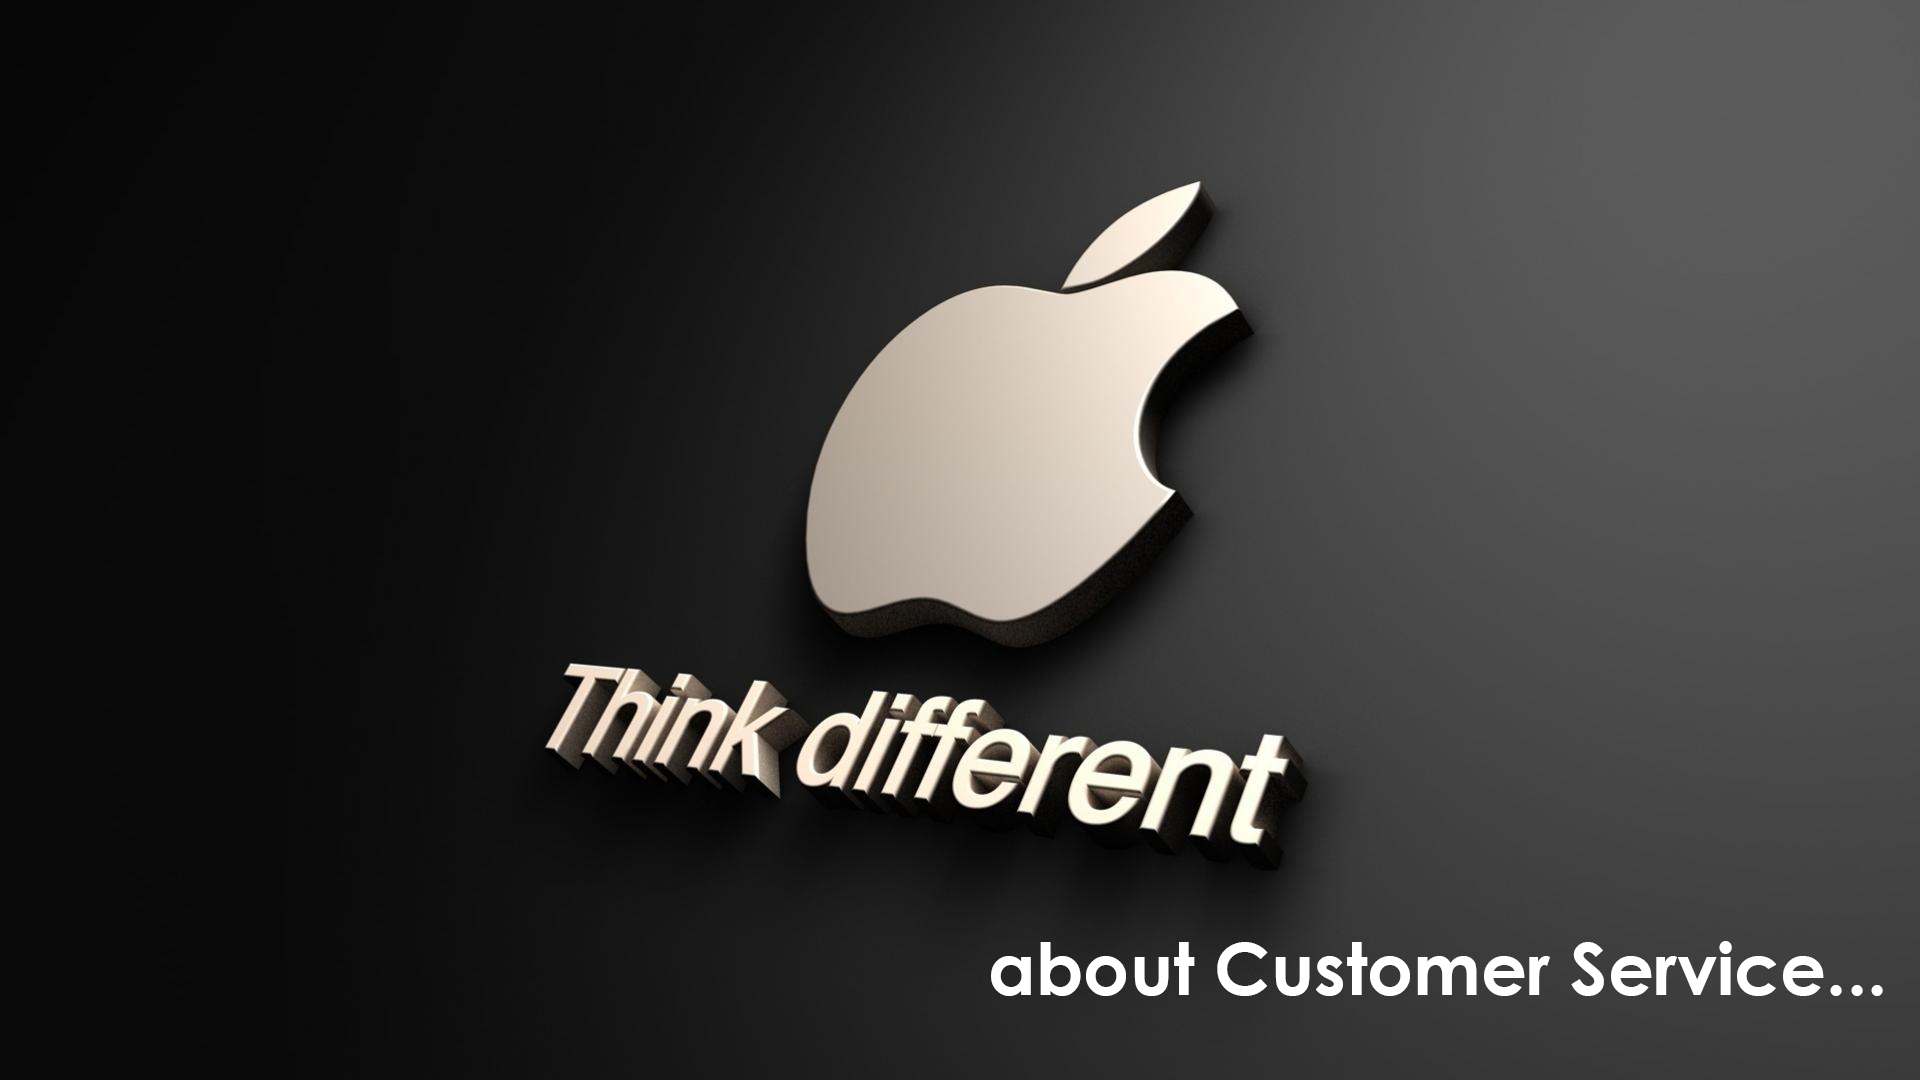 Apple Customer Service...Not